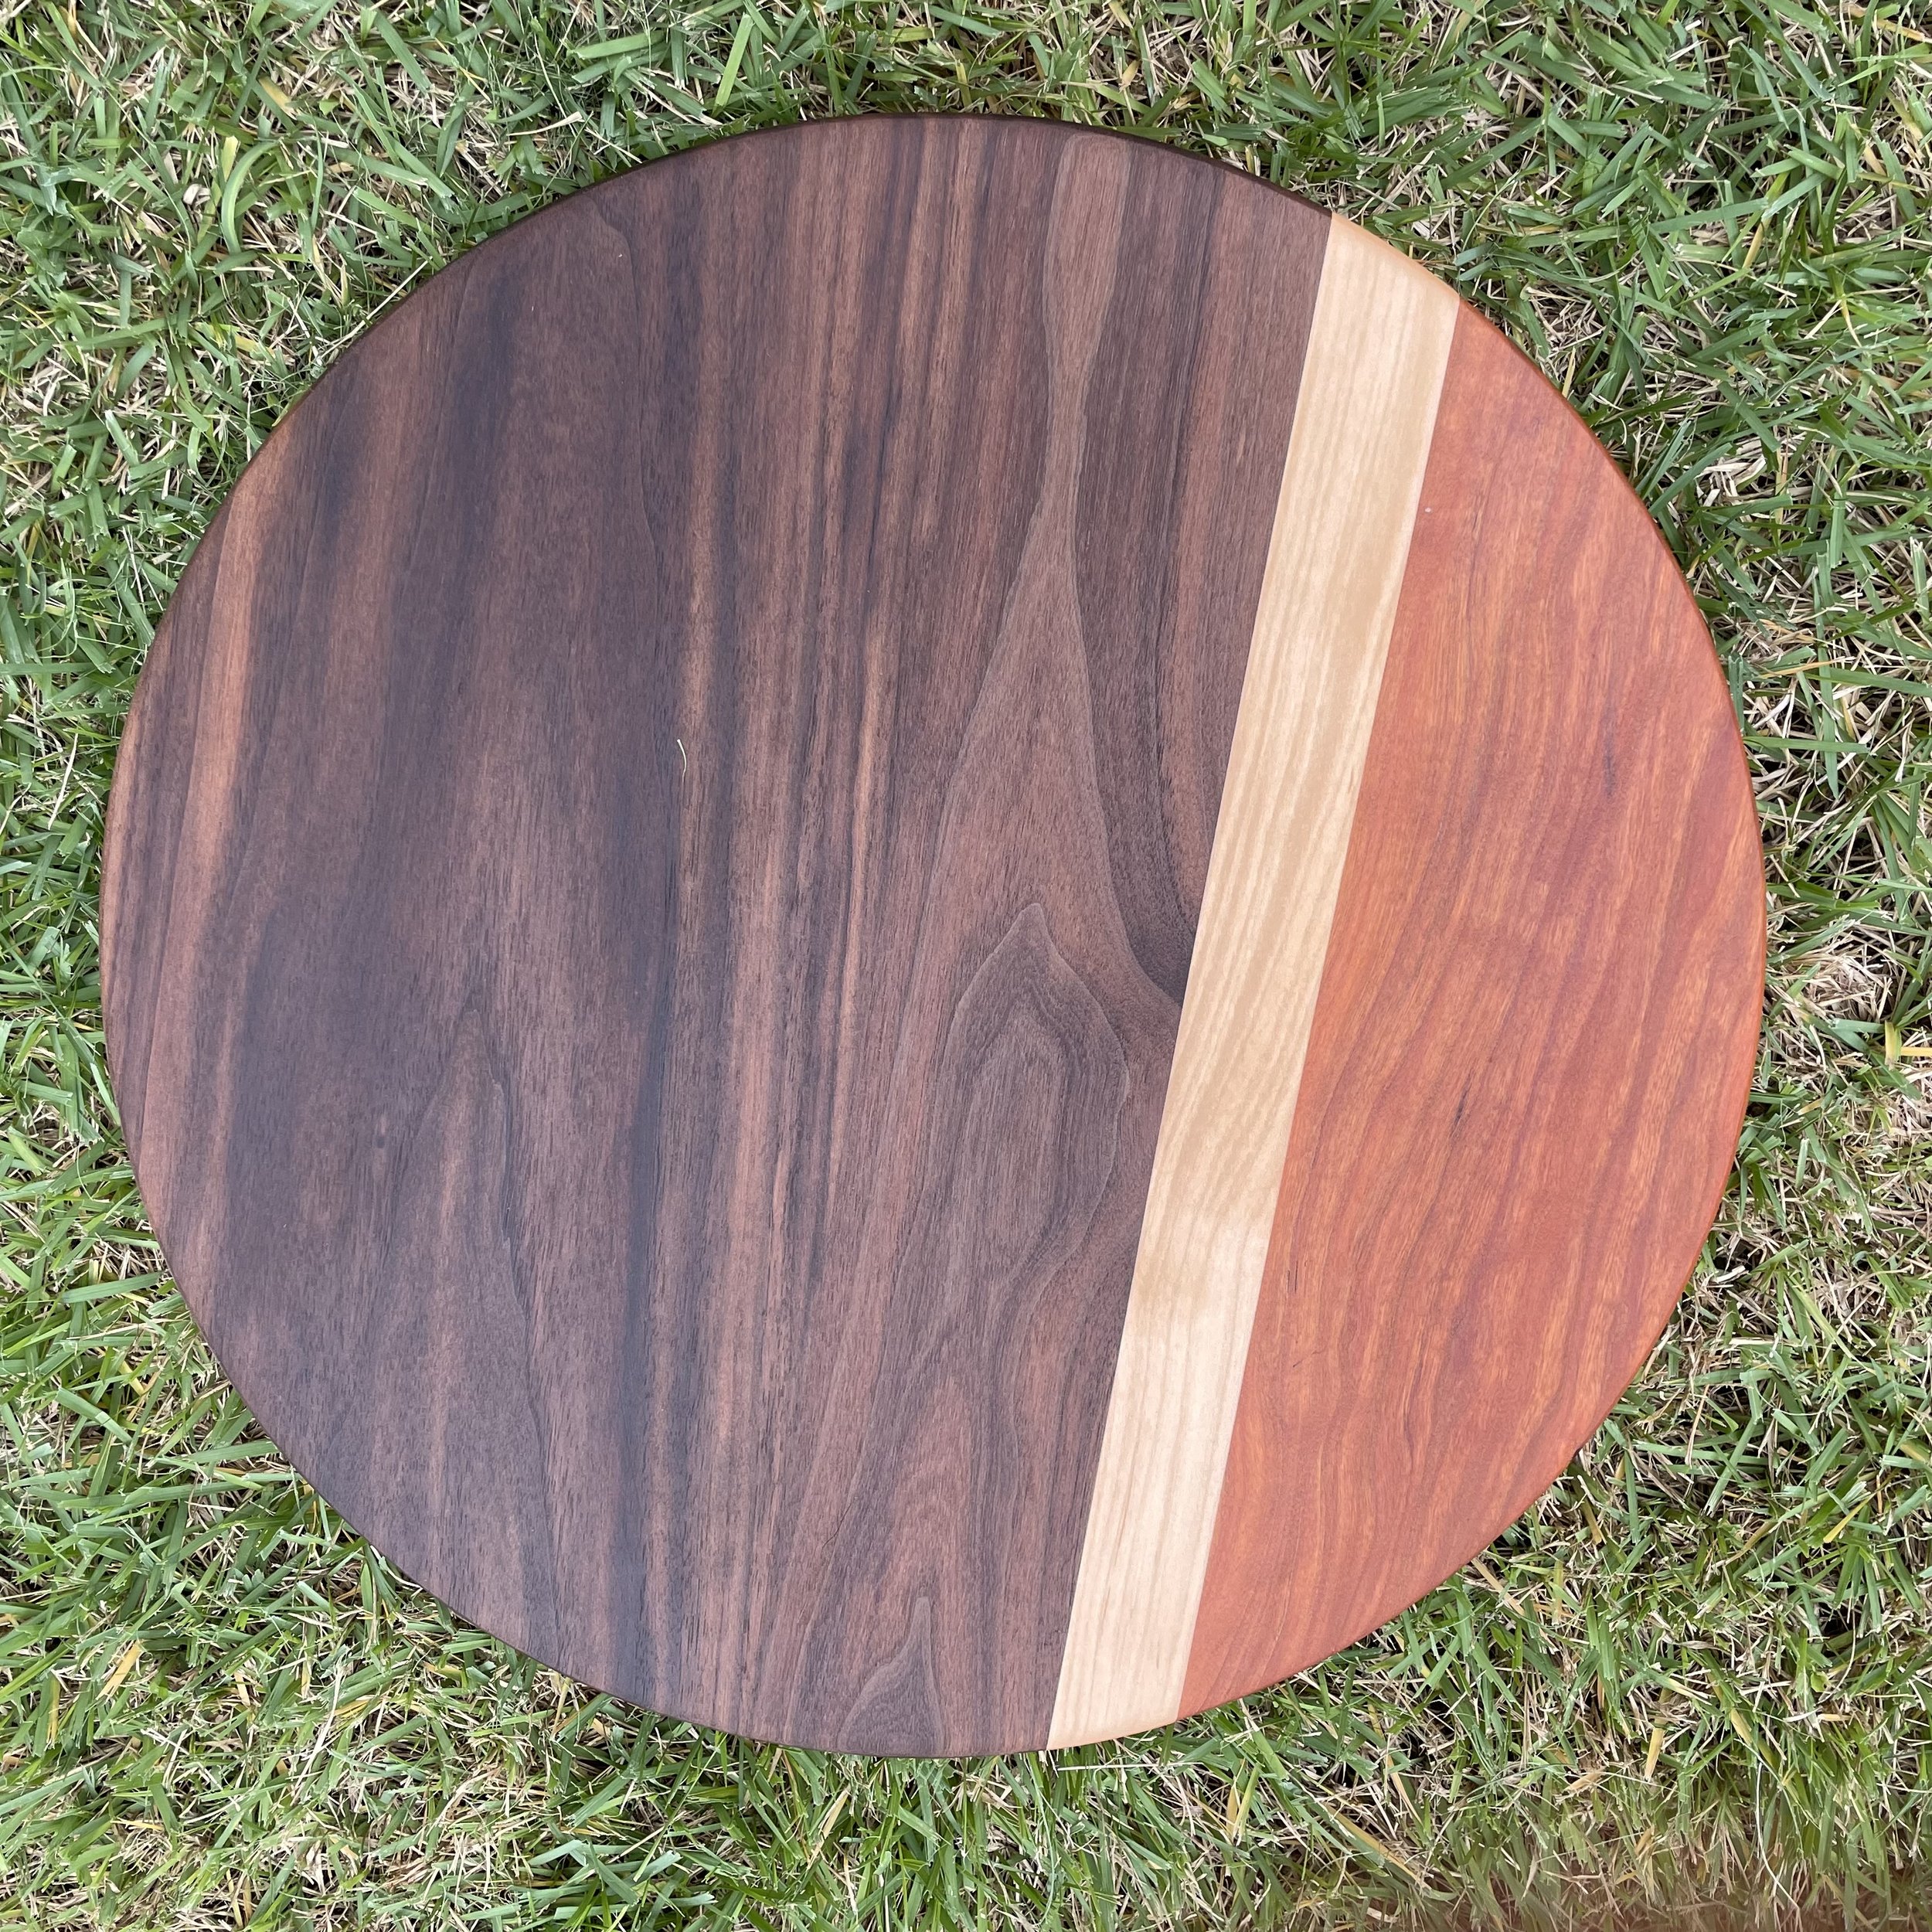 Walnut Hardwood - Walnut Wood and Thin Boards